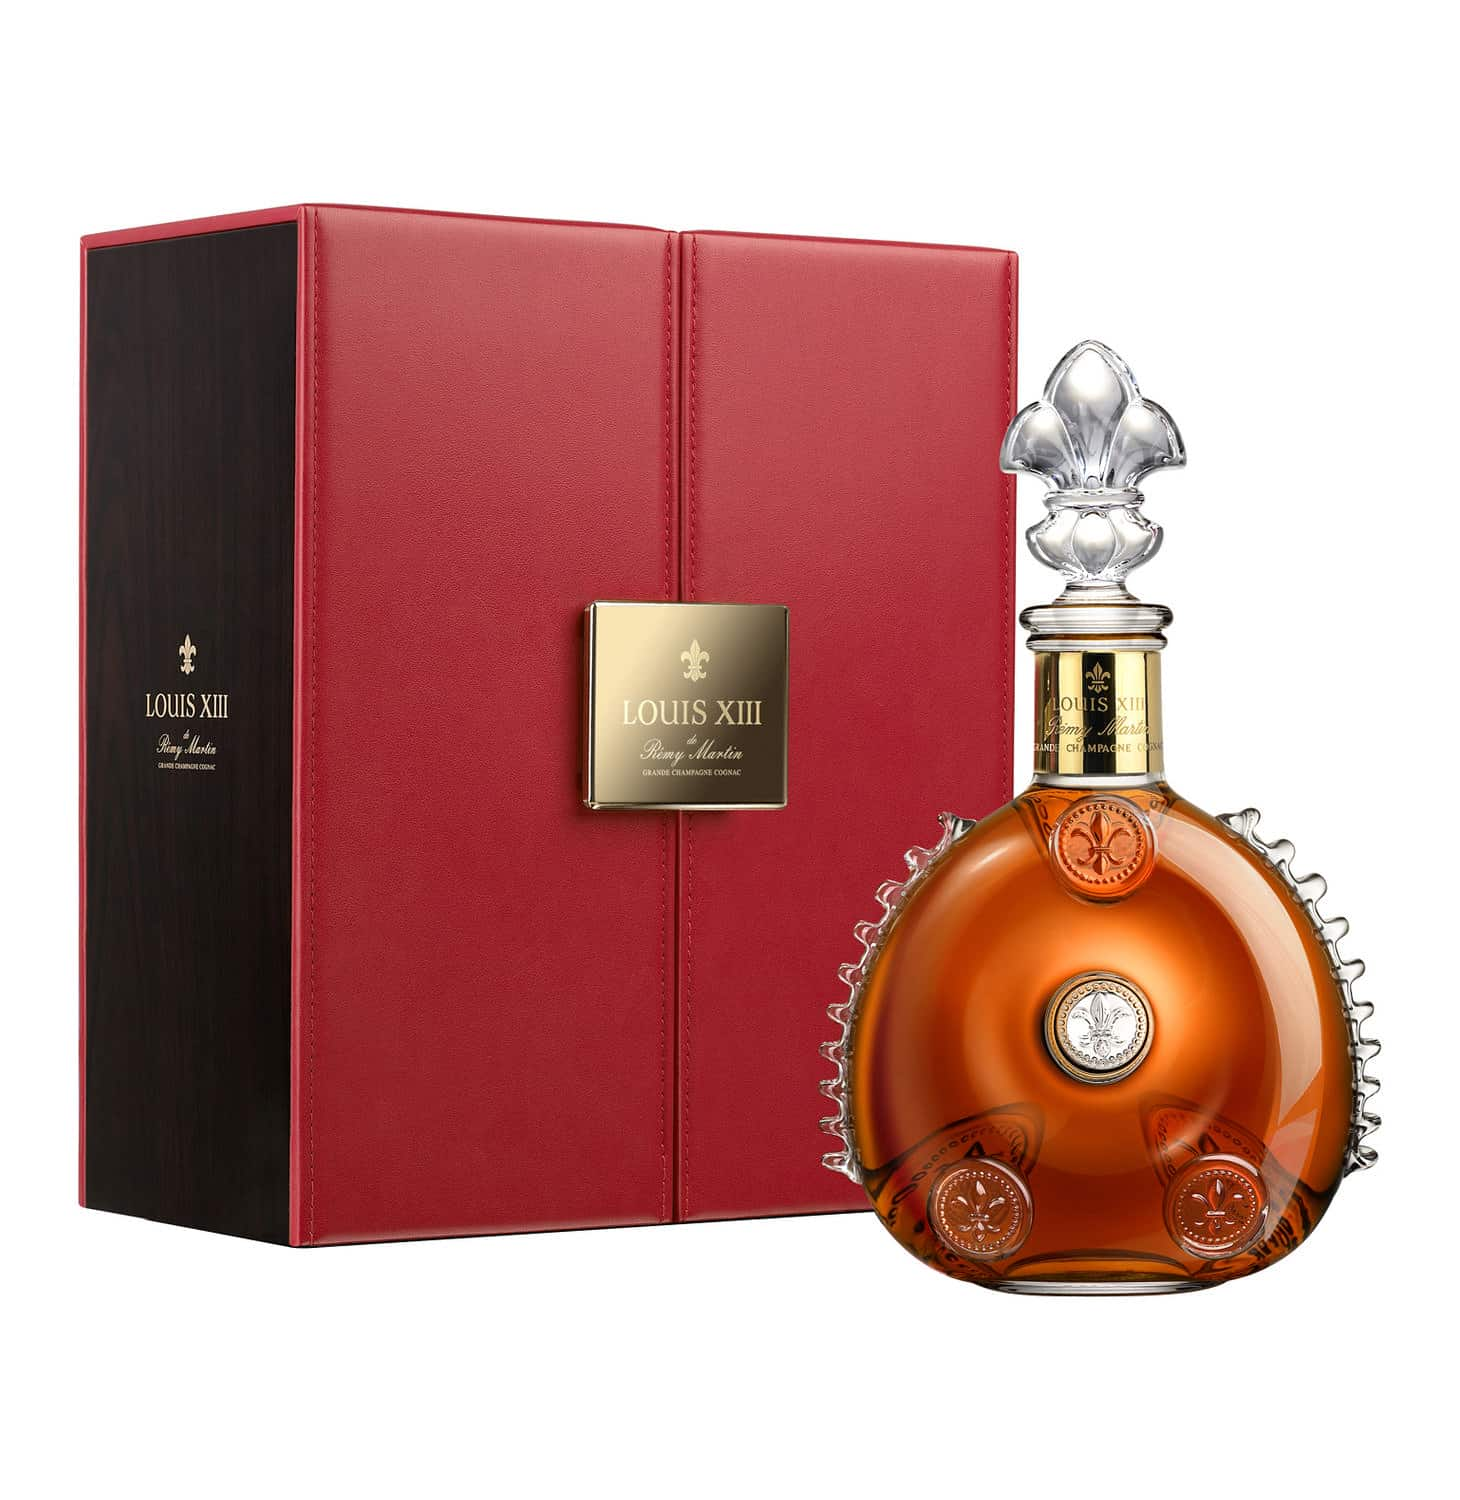 Cognac Louis XIII Remy Martin 700 ml.